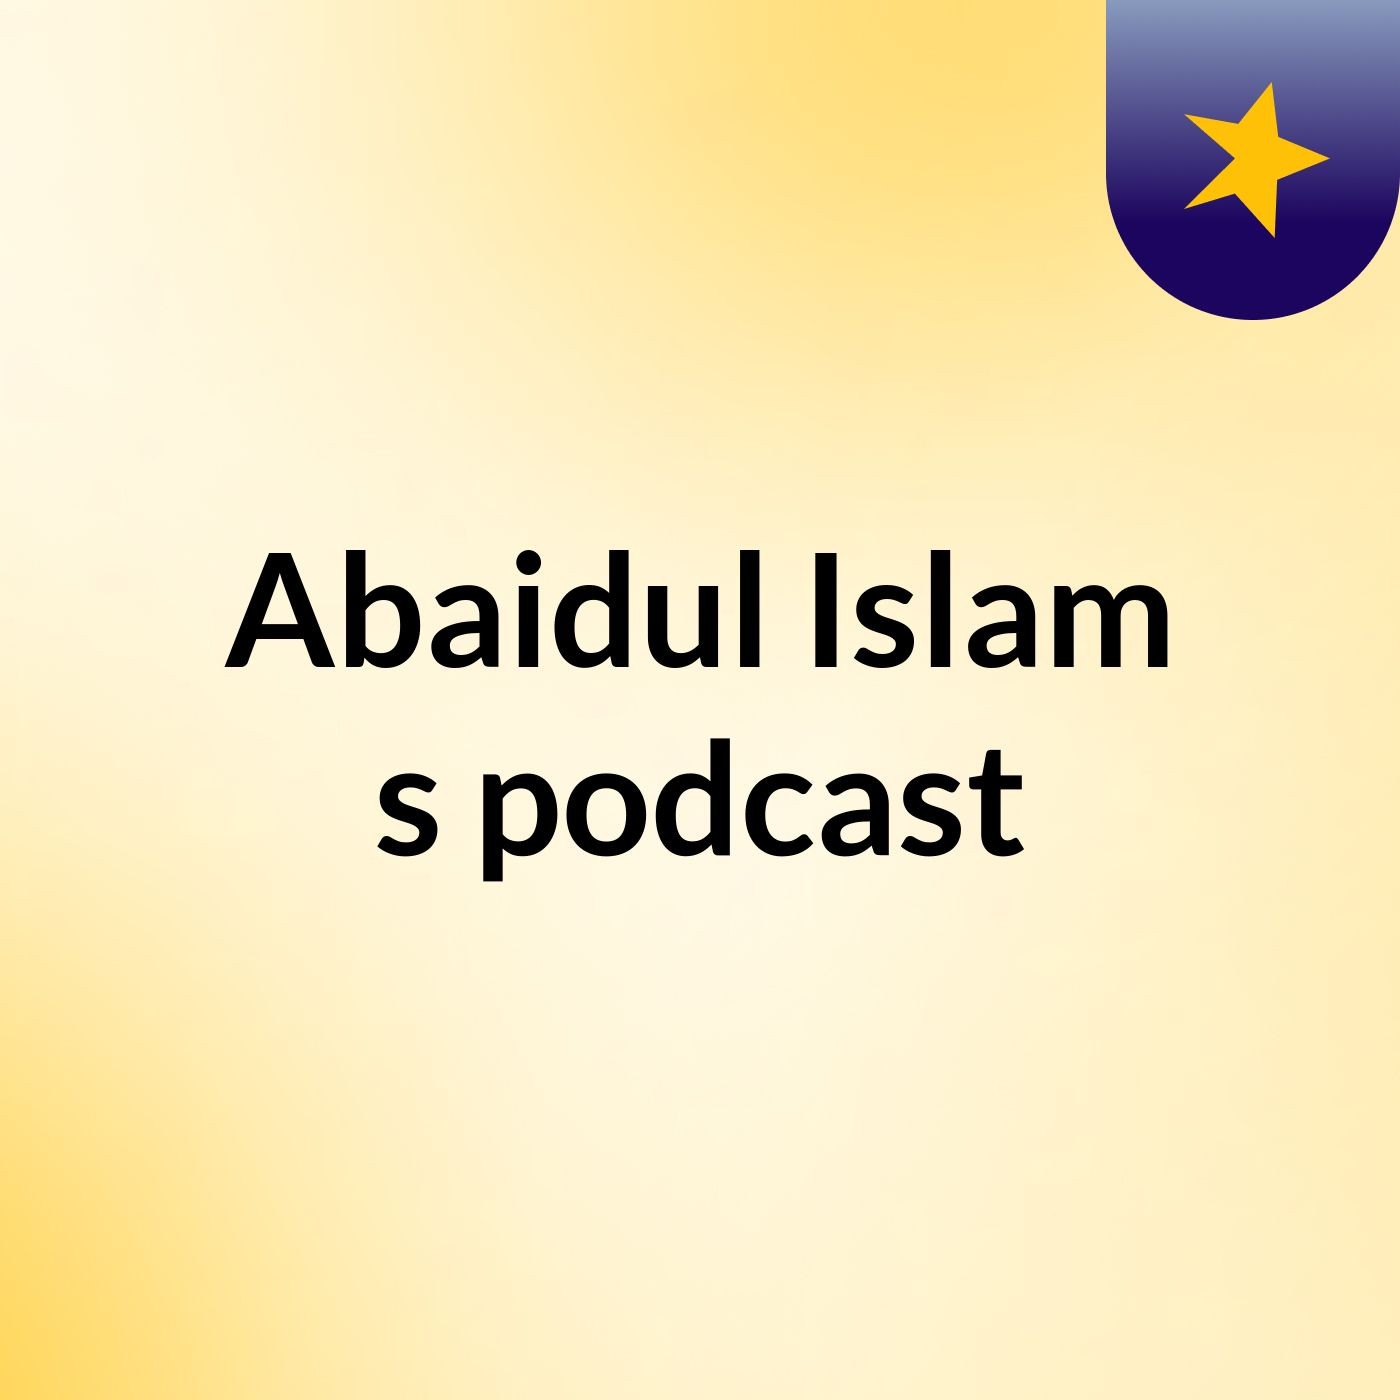 Abaidul Islam's podcast